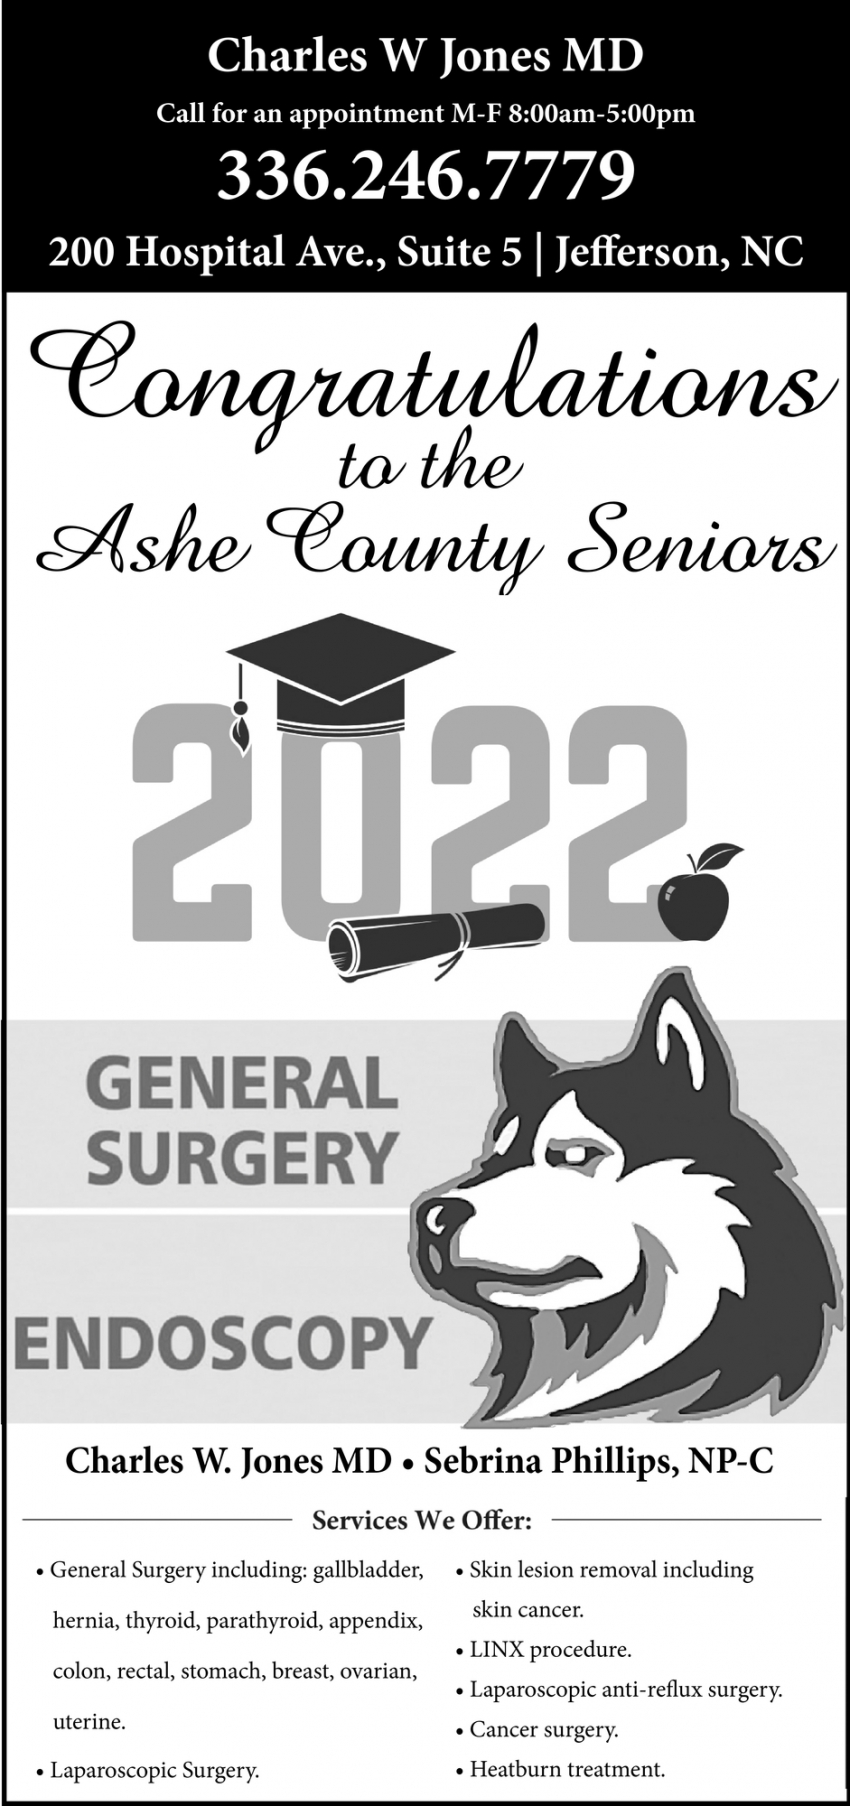 Congratulations to the Ashe County Seniors